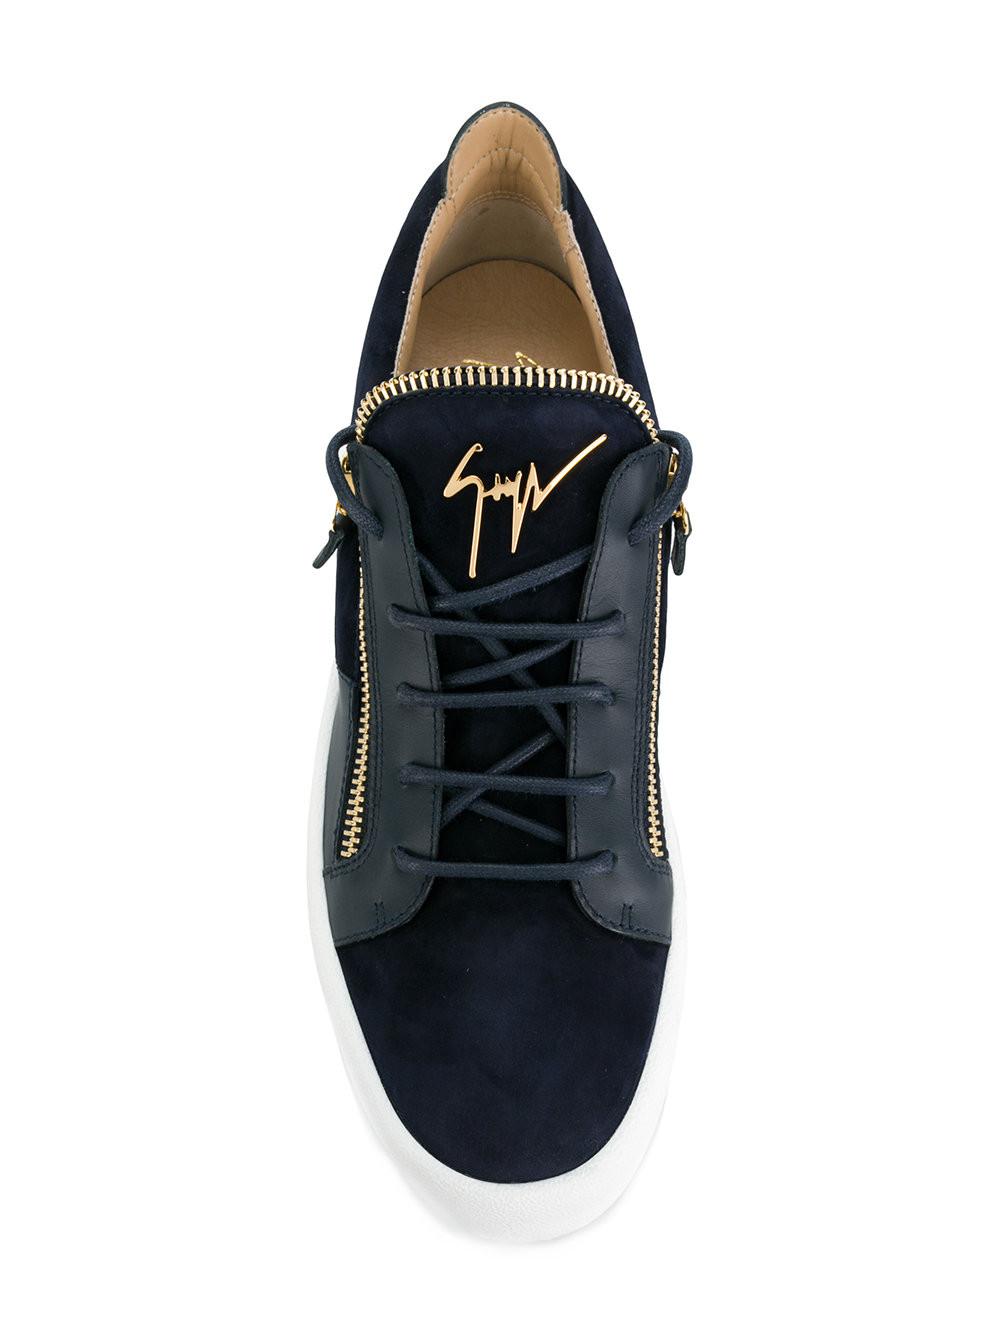 Giuseppe Zanotti Leather Frankie Sneakers in Blue for Men - Lyst